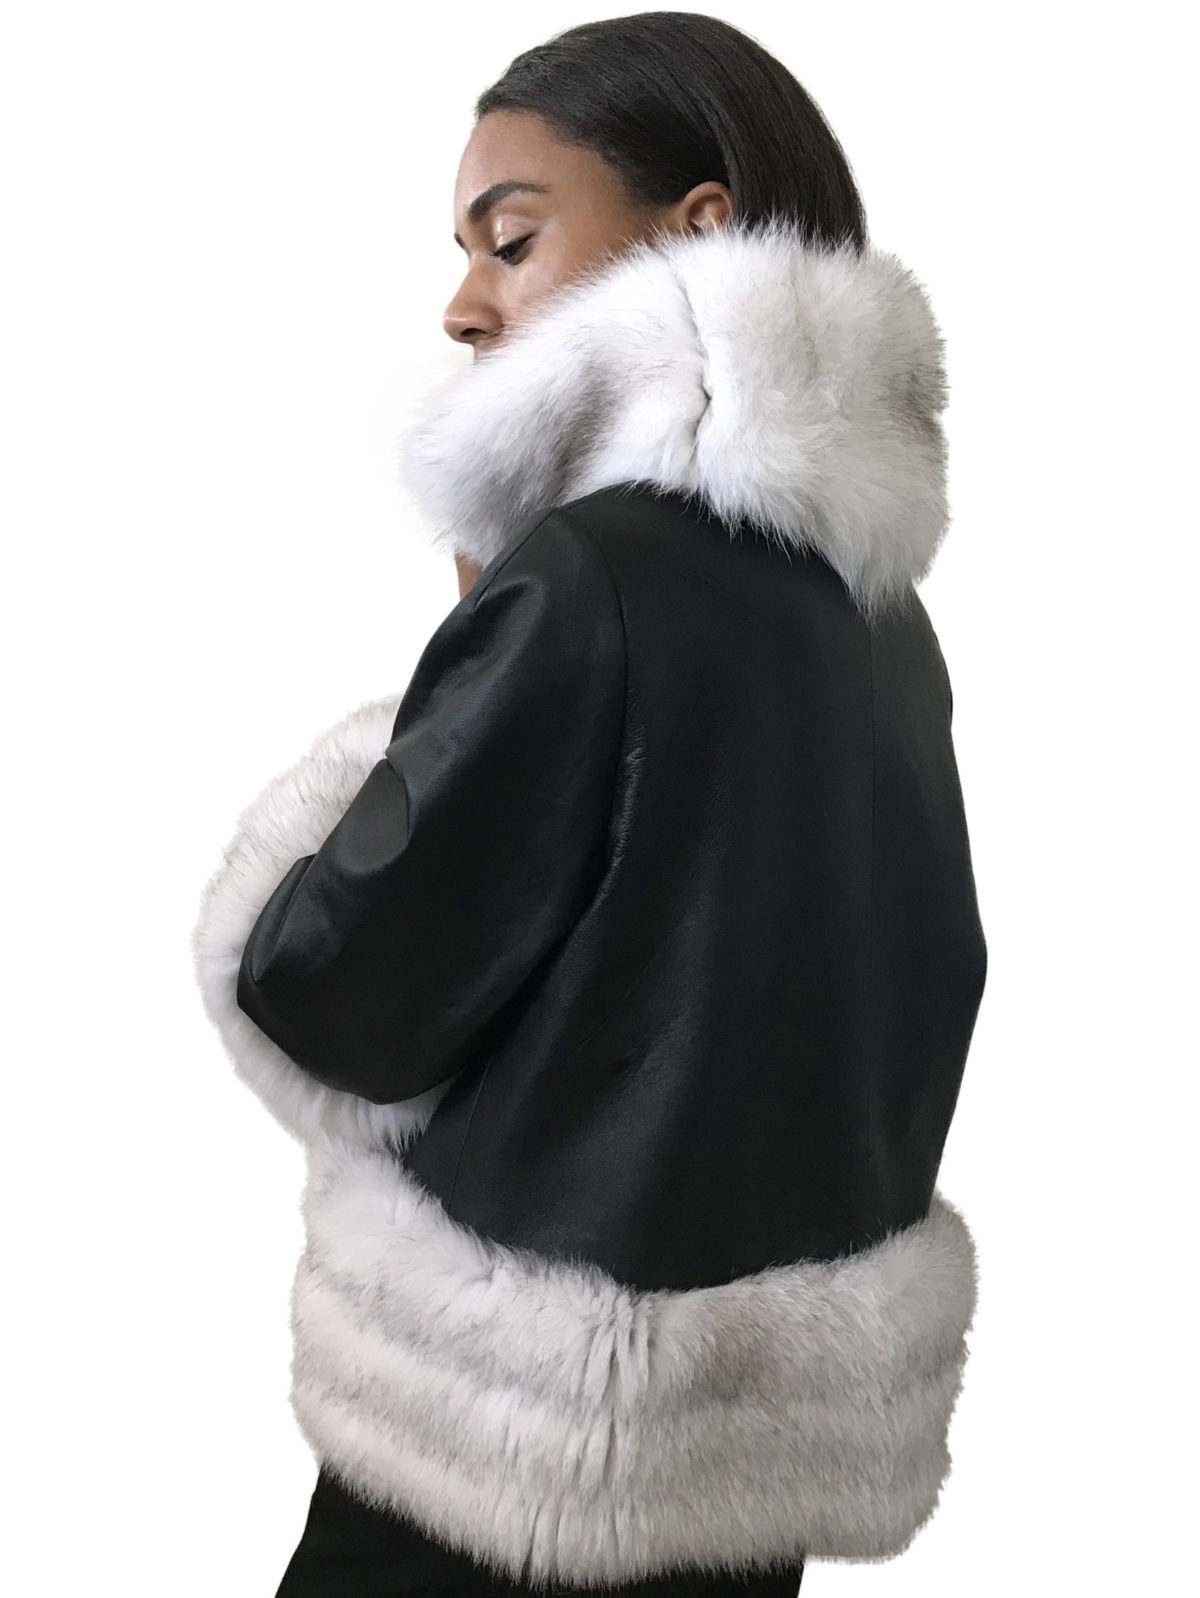 Coat arctic fox fur and leather